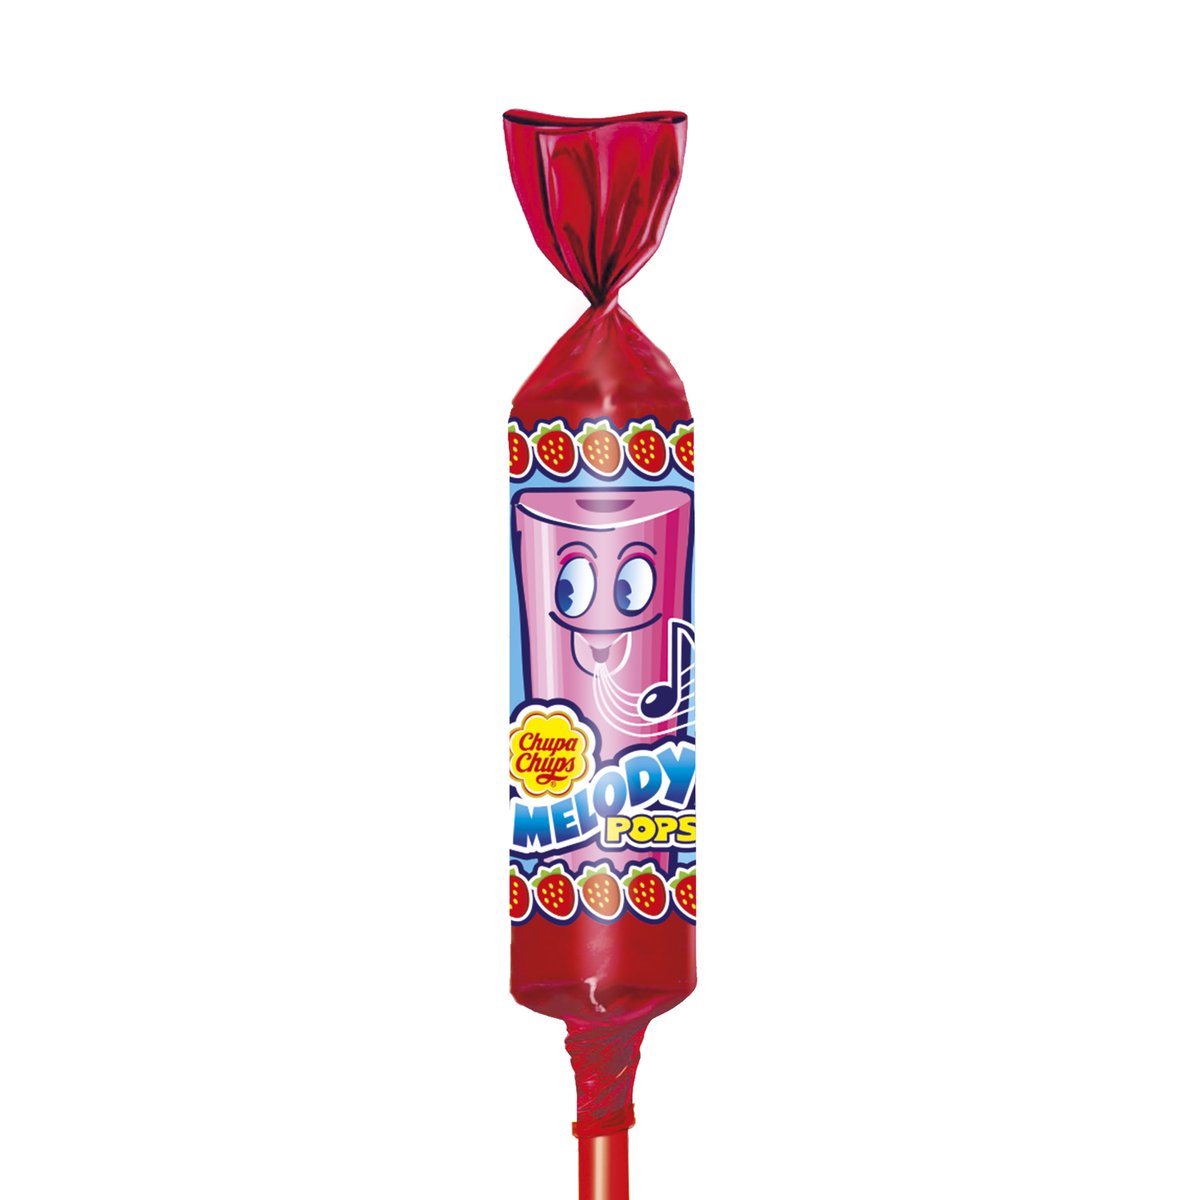 Chupa Chups Melody Pop Lollipop Candy Strawberry Flavor 15 g